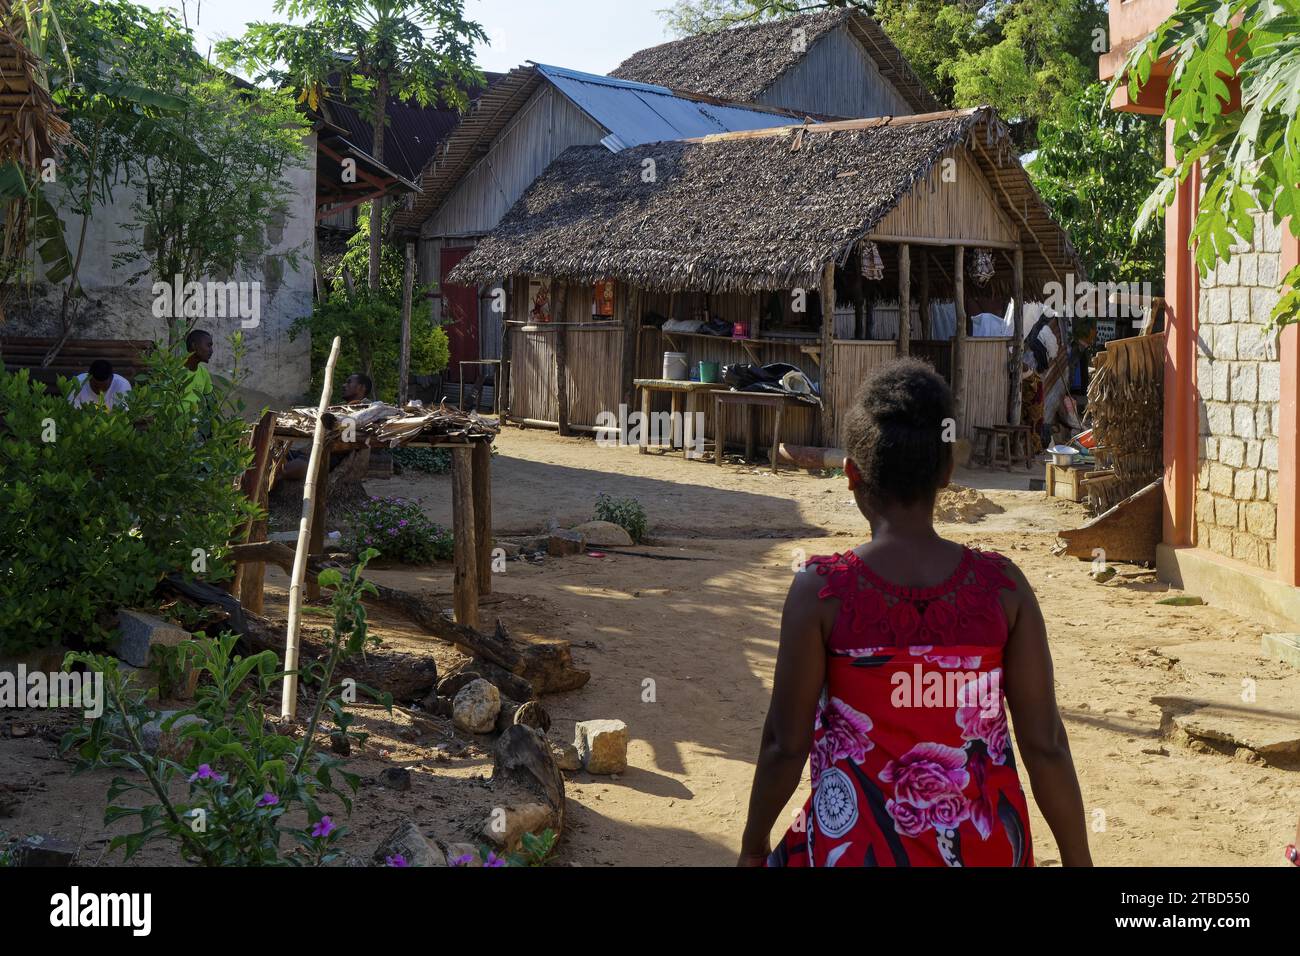 Rue du village, femme en robe rouge, cabane en chaume, Ampangorinana, Nosy Komba, Madagascar Banque D'Images